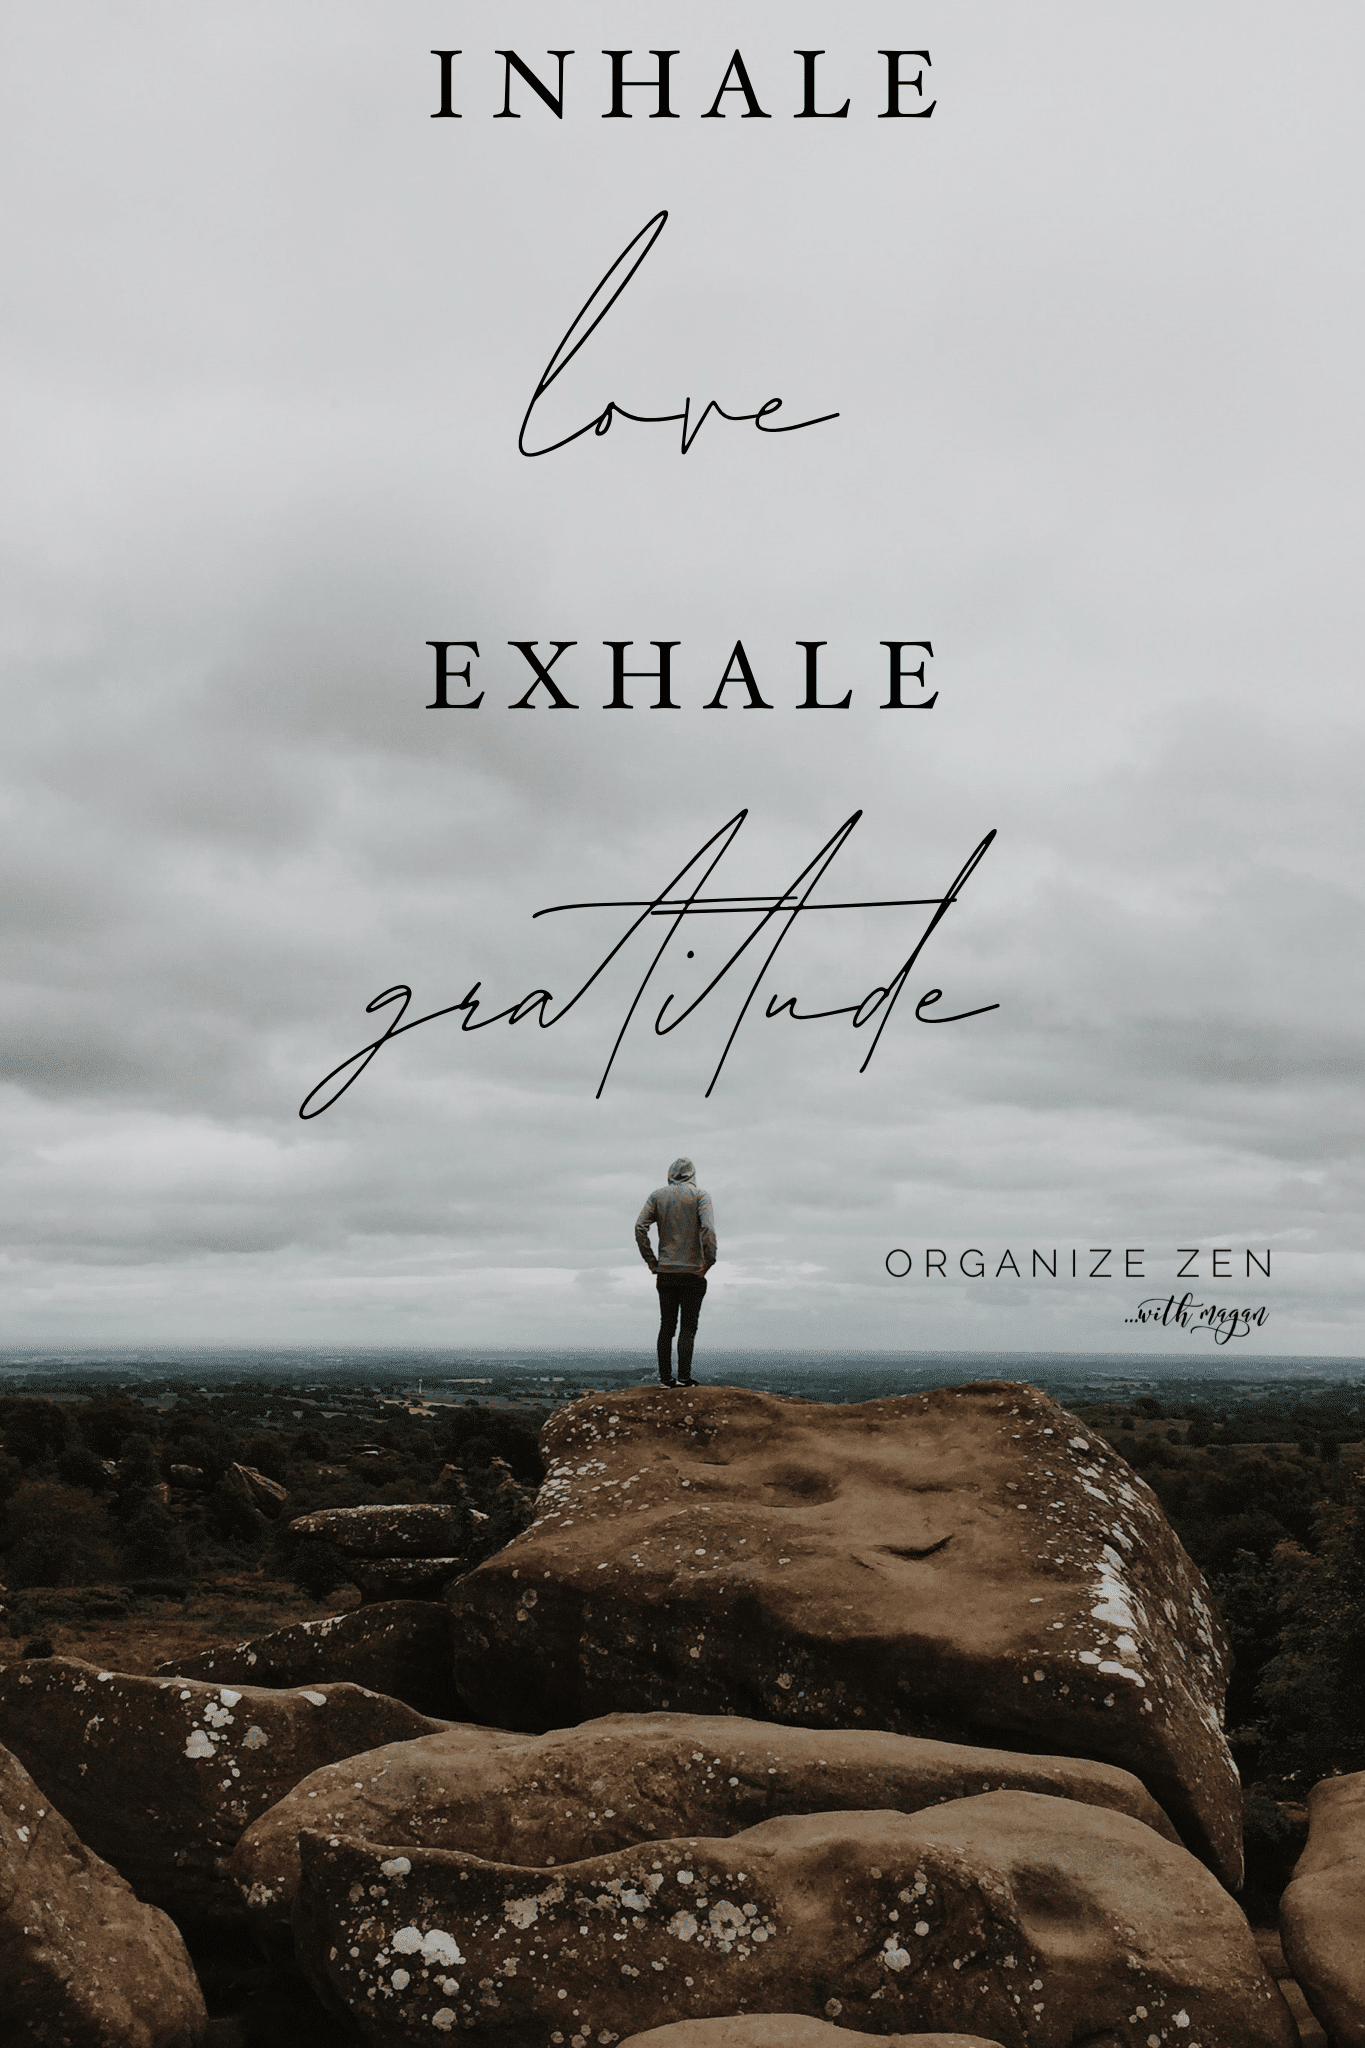 Inhale love exhale gratitude quote